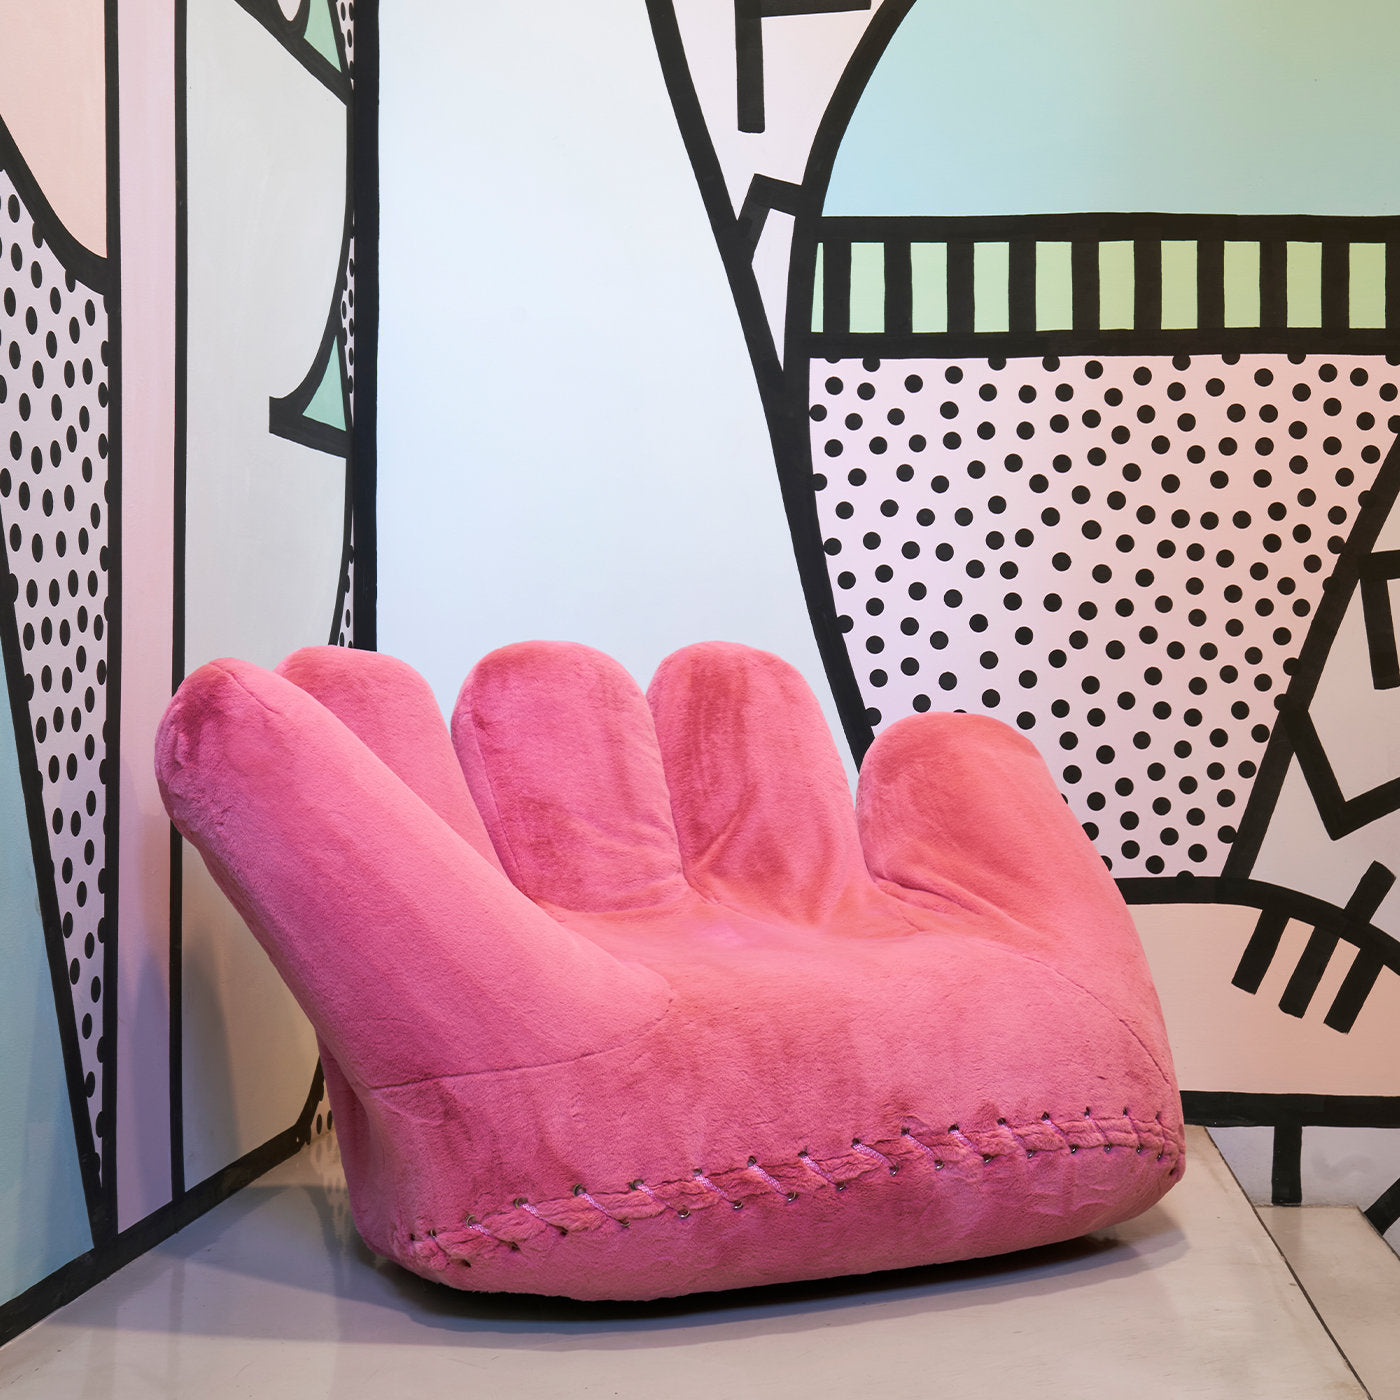 Joe Plush Pink Armchair - Alternative view 1